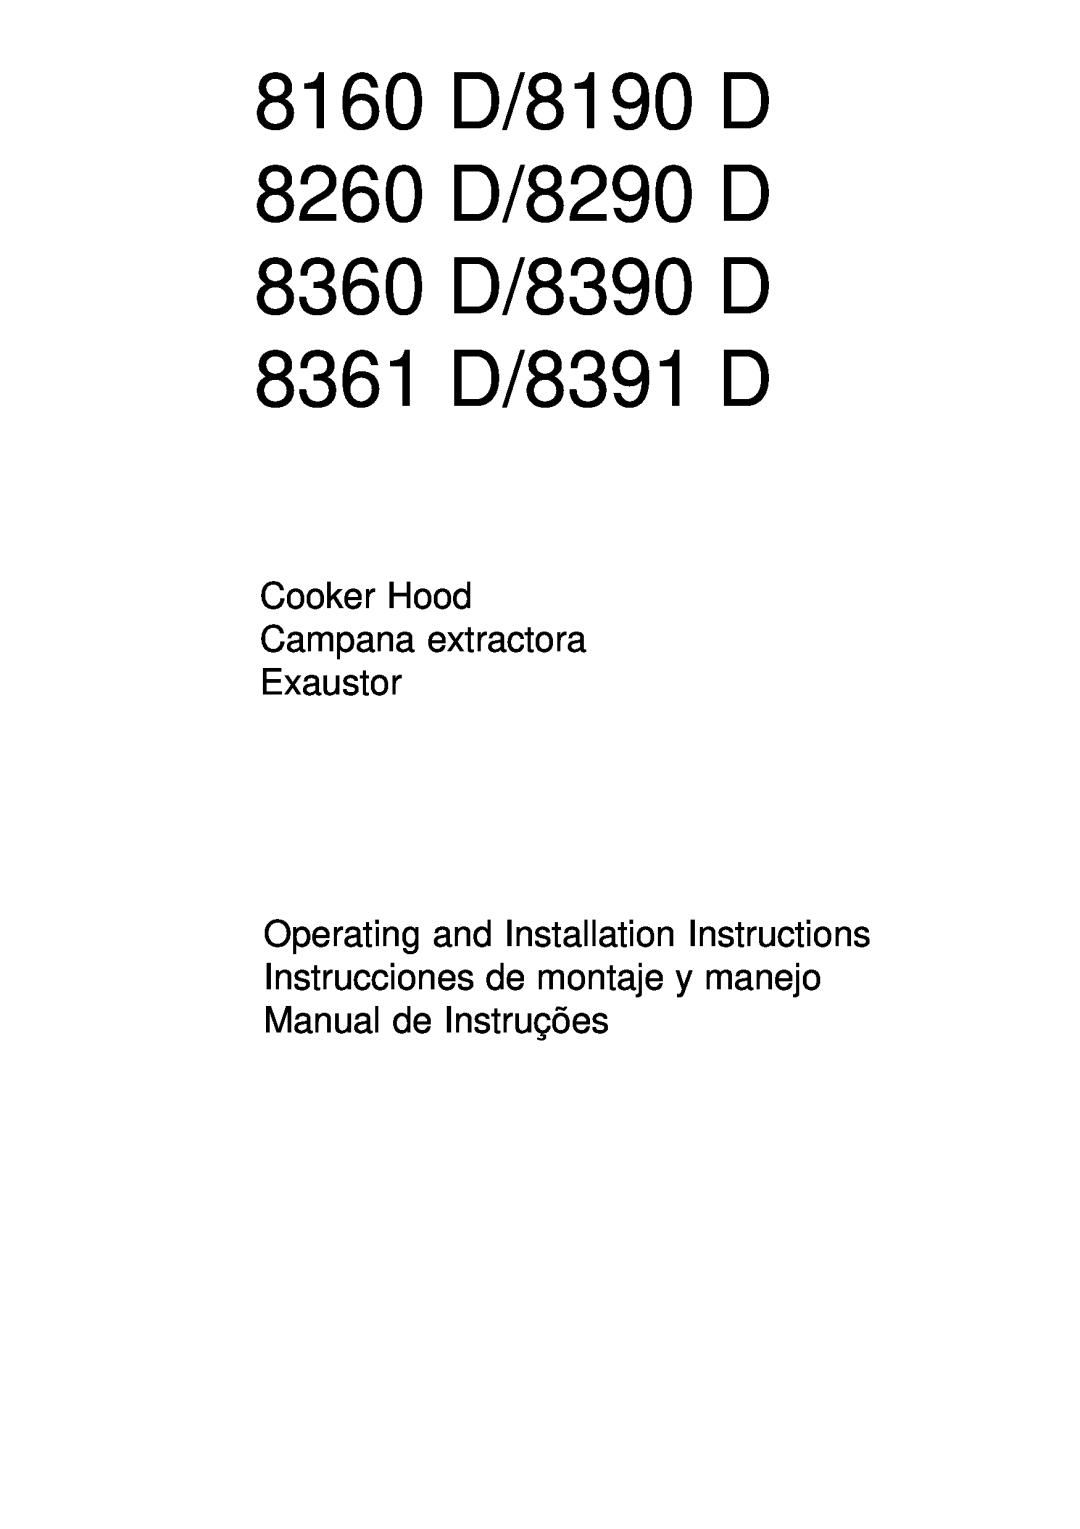 AEG installation instructions 8160 D/8190 D 8260 D/8290 D 8360 D/8390 D 8361 D/8391 D 